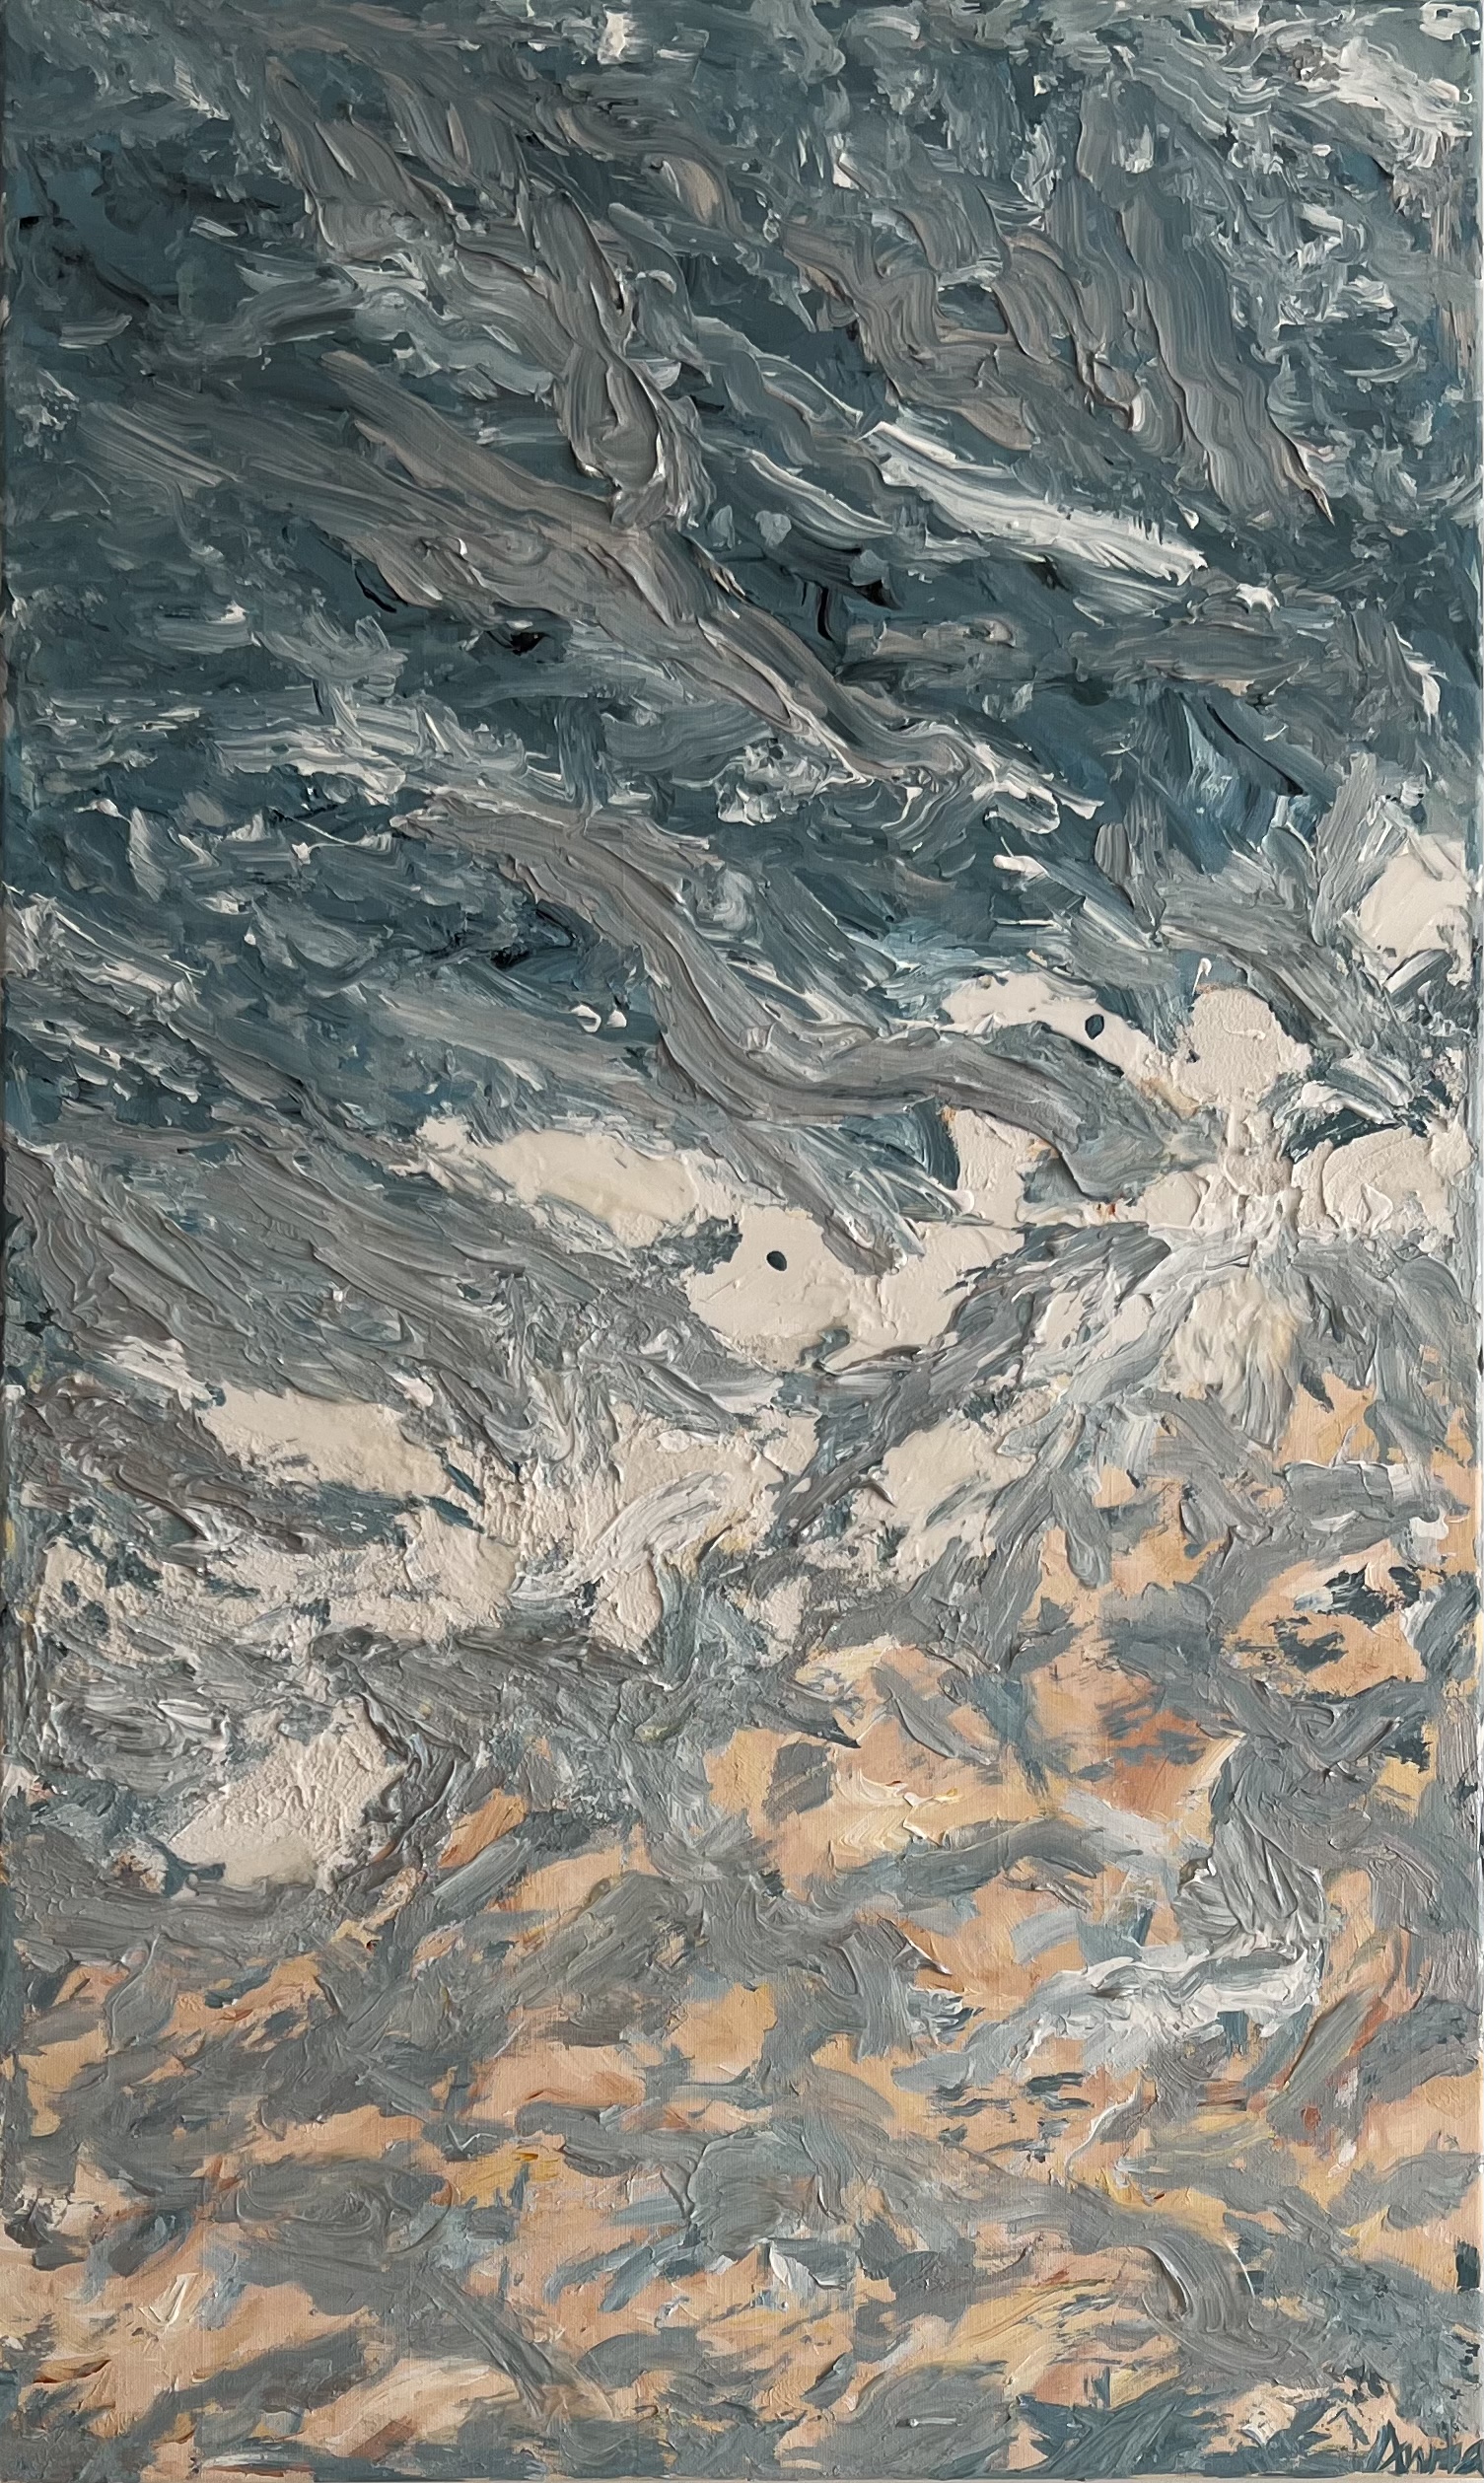 Pacifik | Pacific ocean, 60x100, acrylic on canvas, 2021